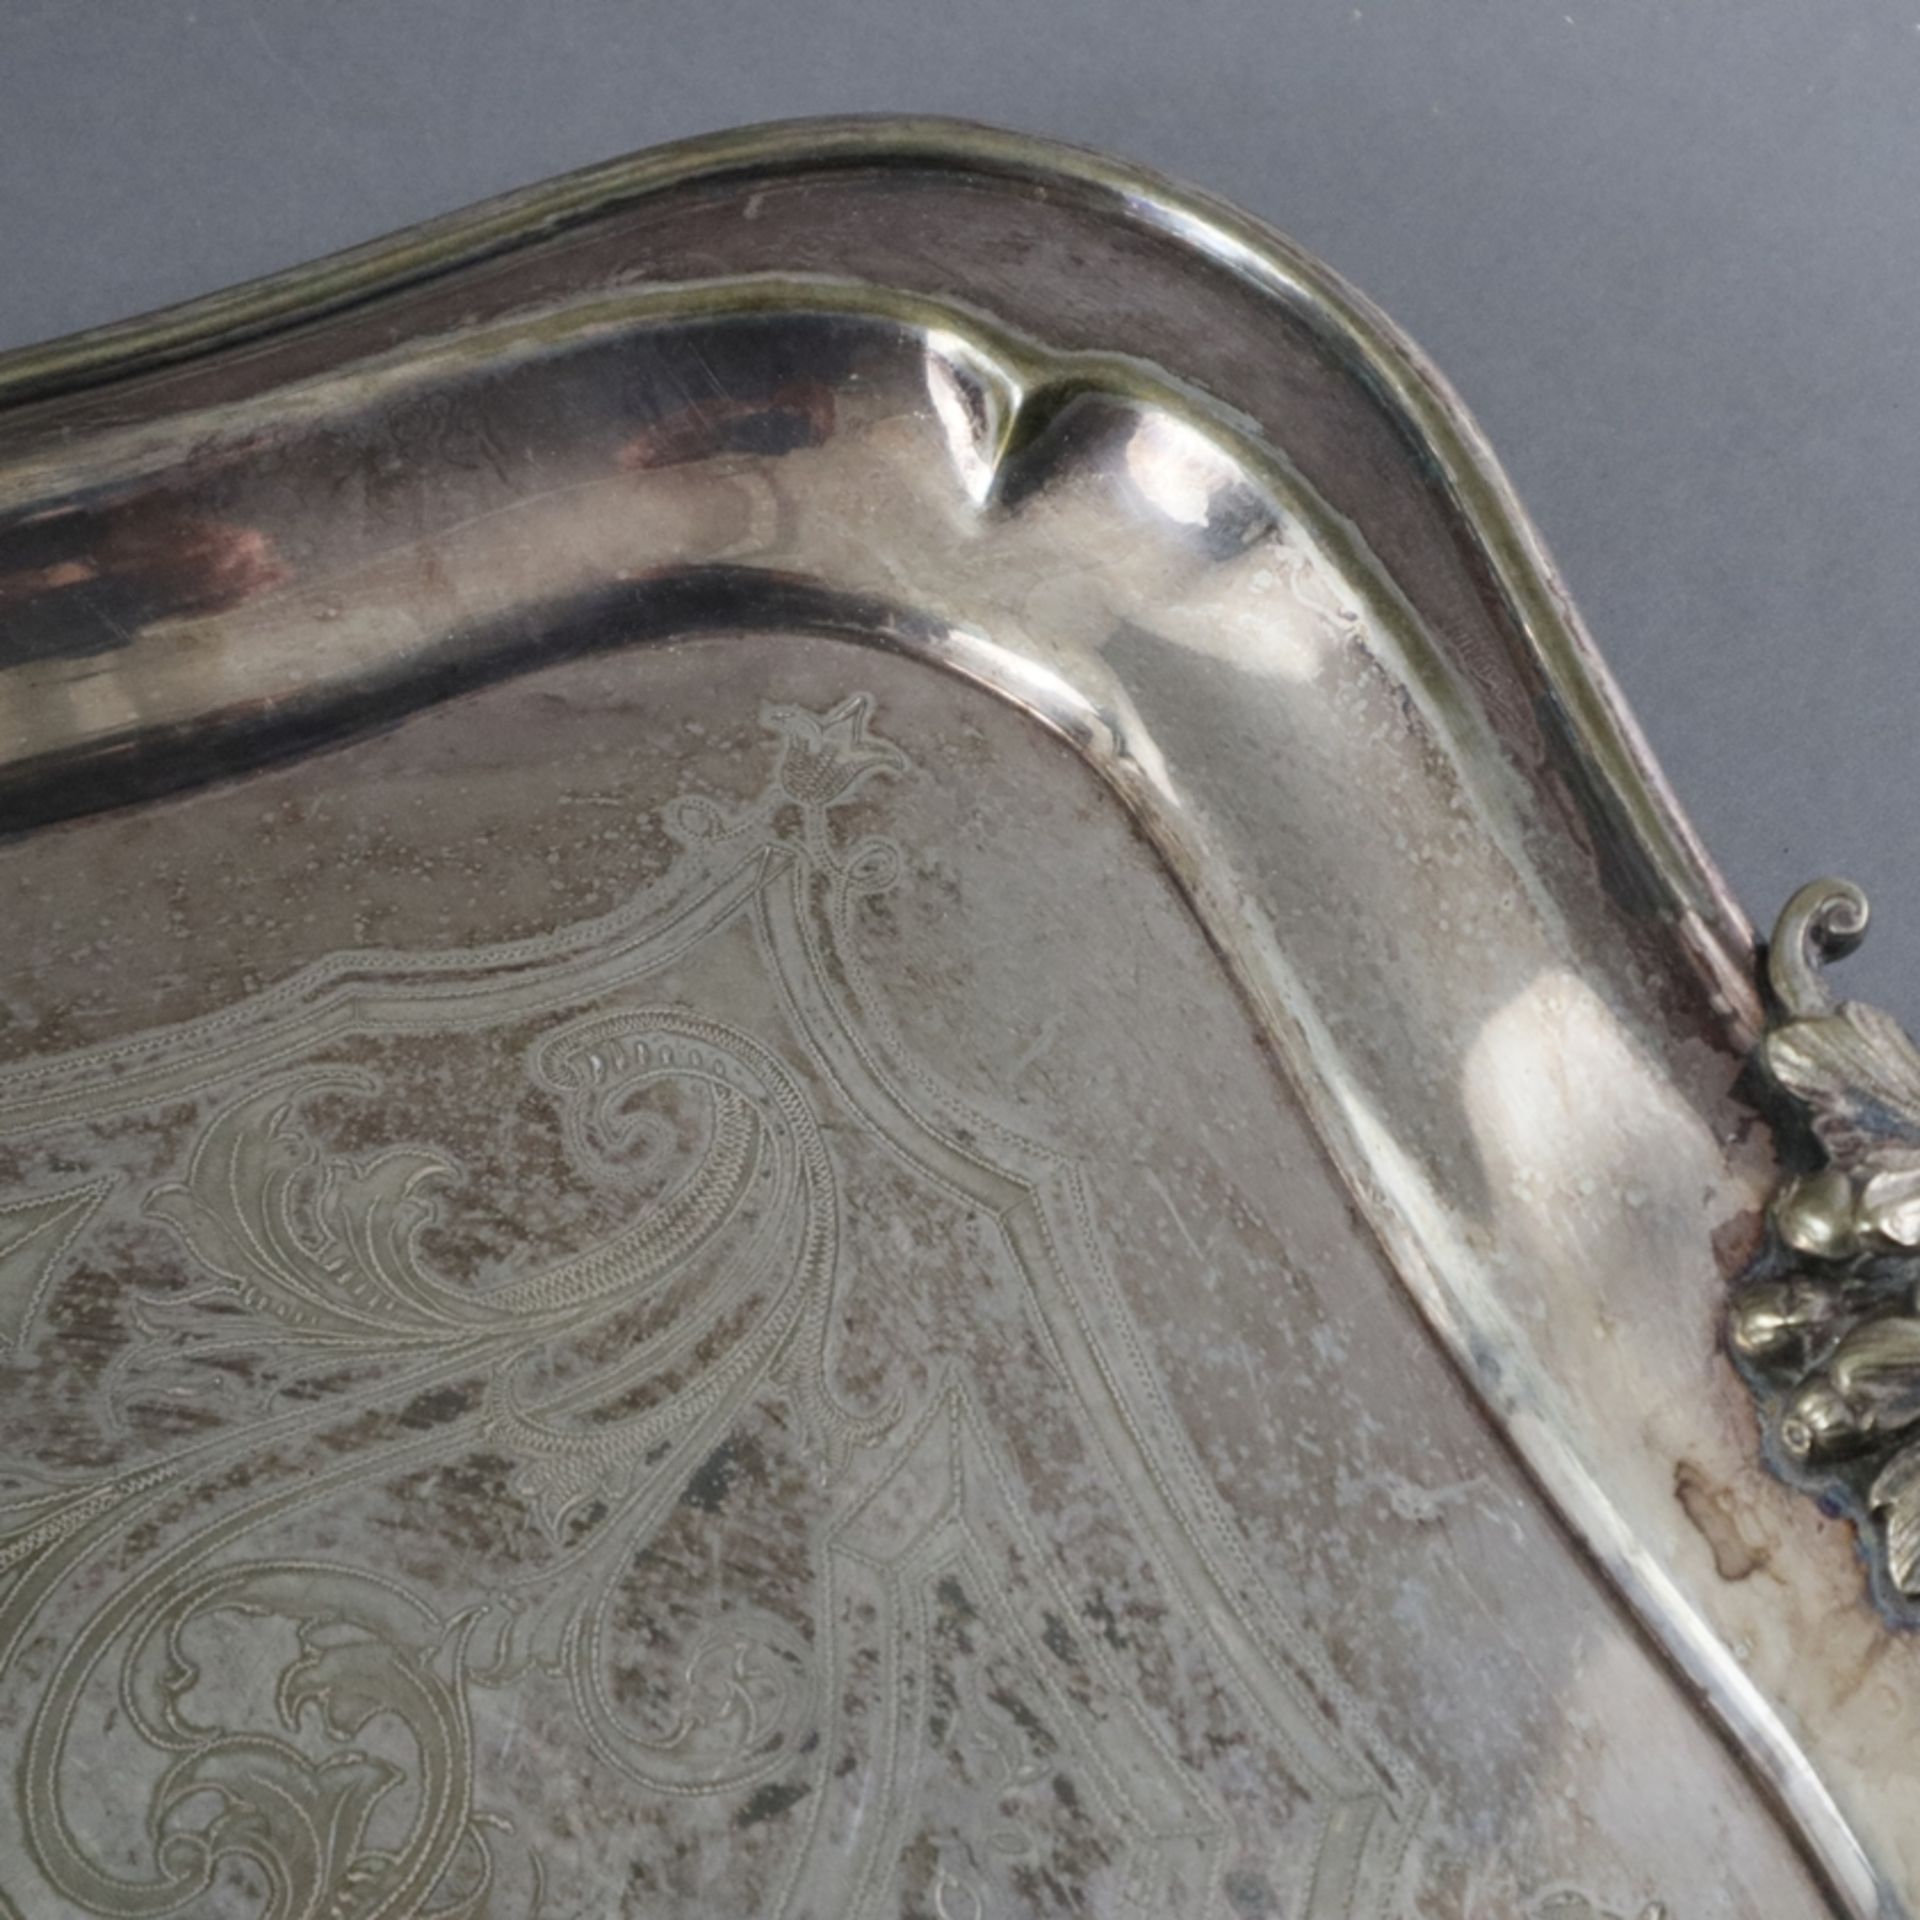 Großes verziertes Serviertablett - Metall versilbert, rechteckige Form mit geschweiftem ansteigende - Image 3 of 7